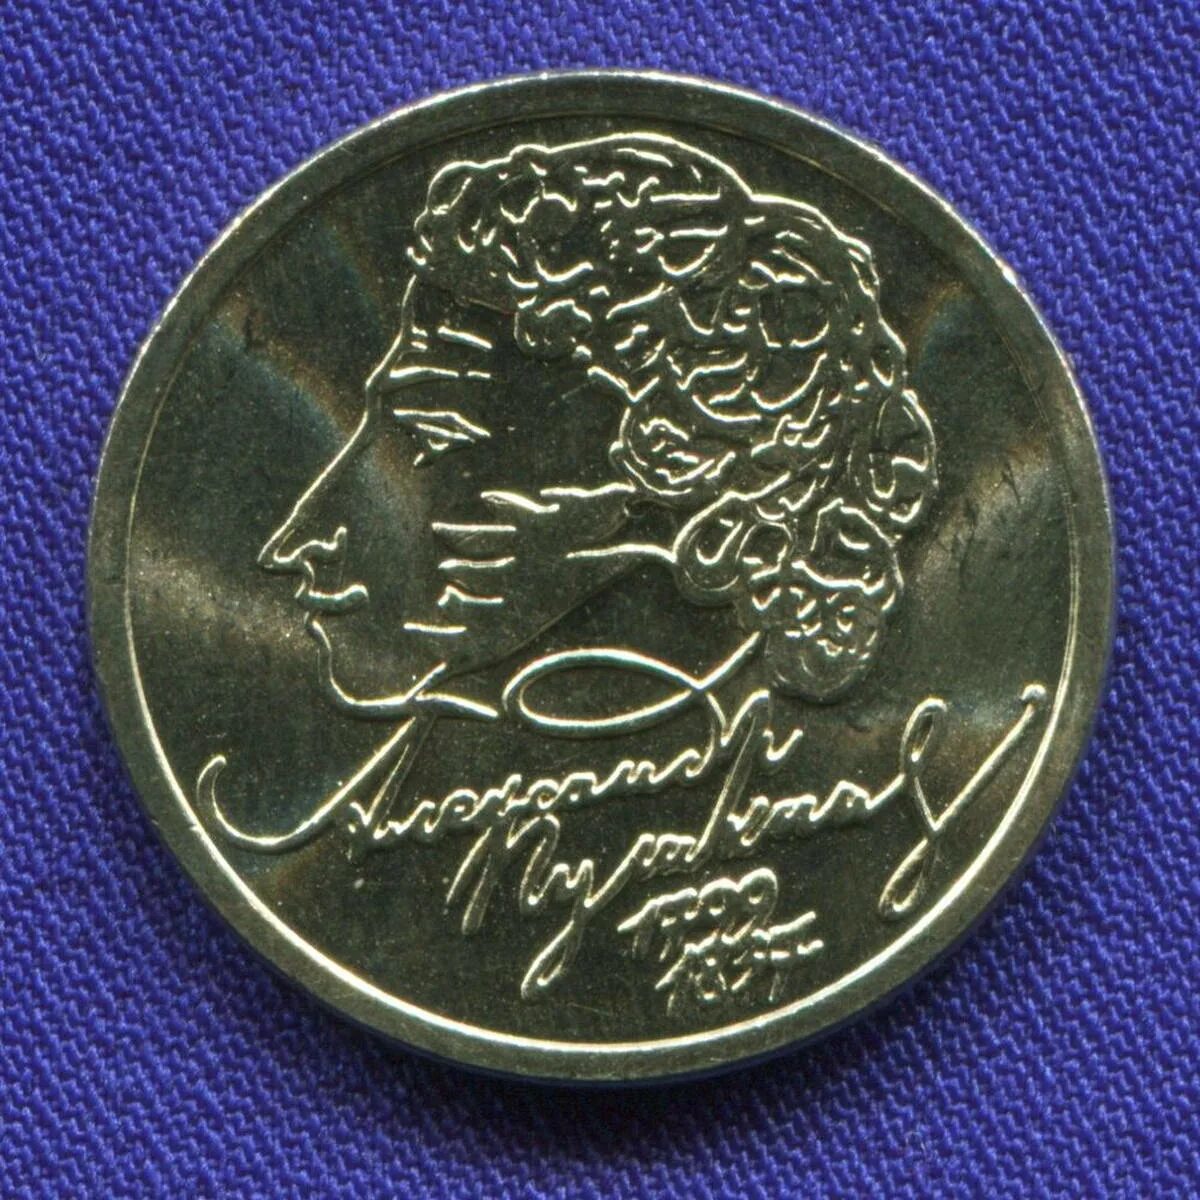 1 Рубль Пушкин 1999. Монета 1 рубль Пушкин 1999. Монета с Пушкиным 1999. Монета пушкин 1